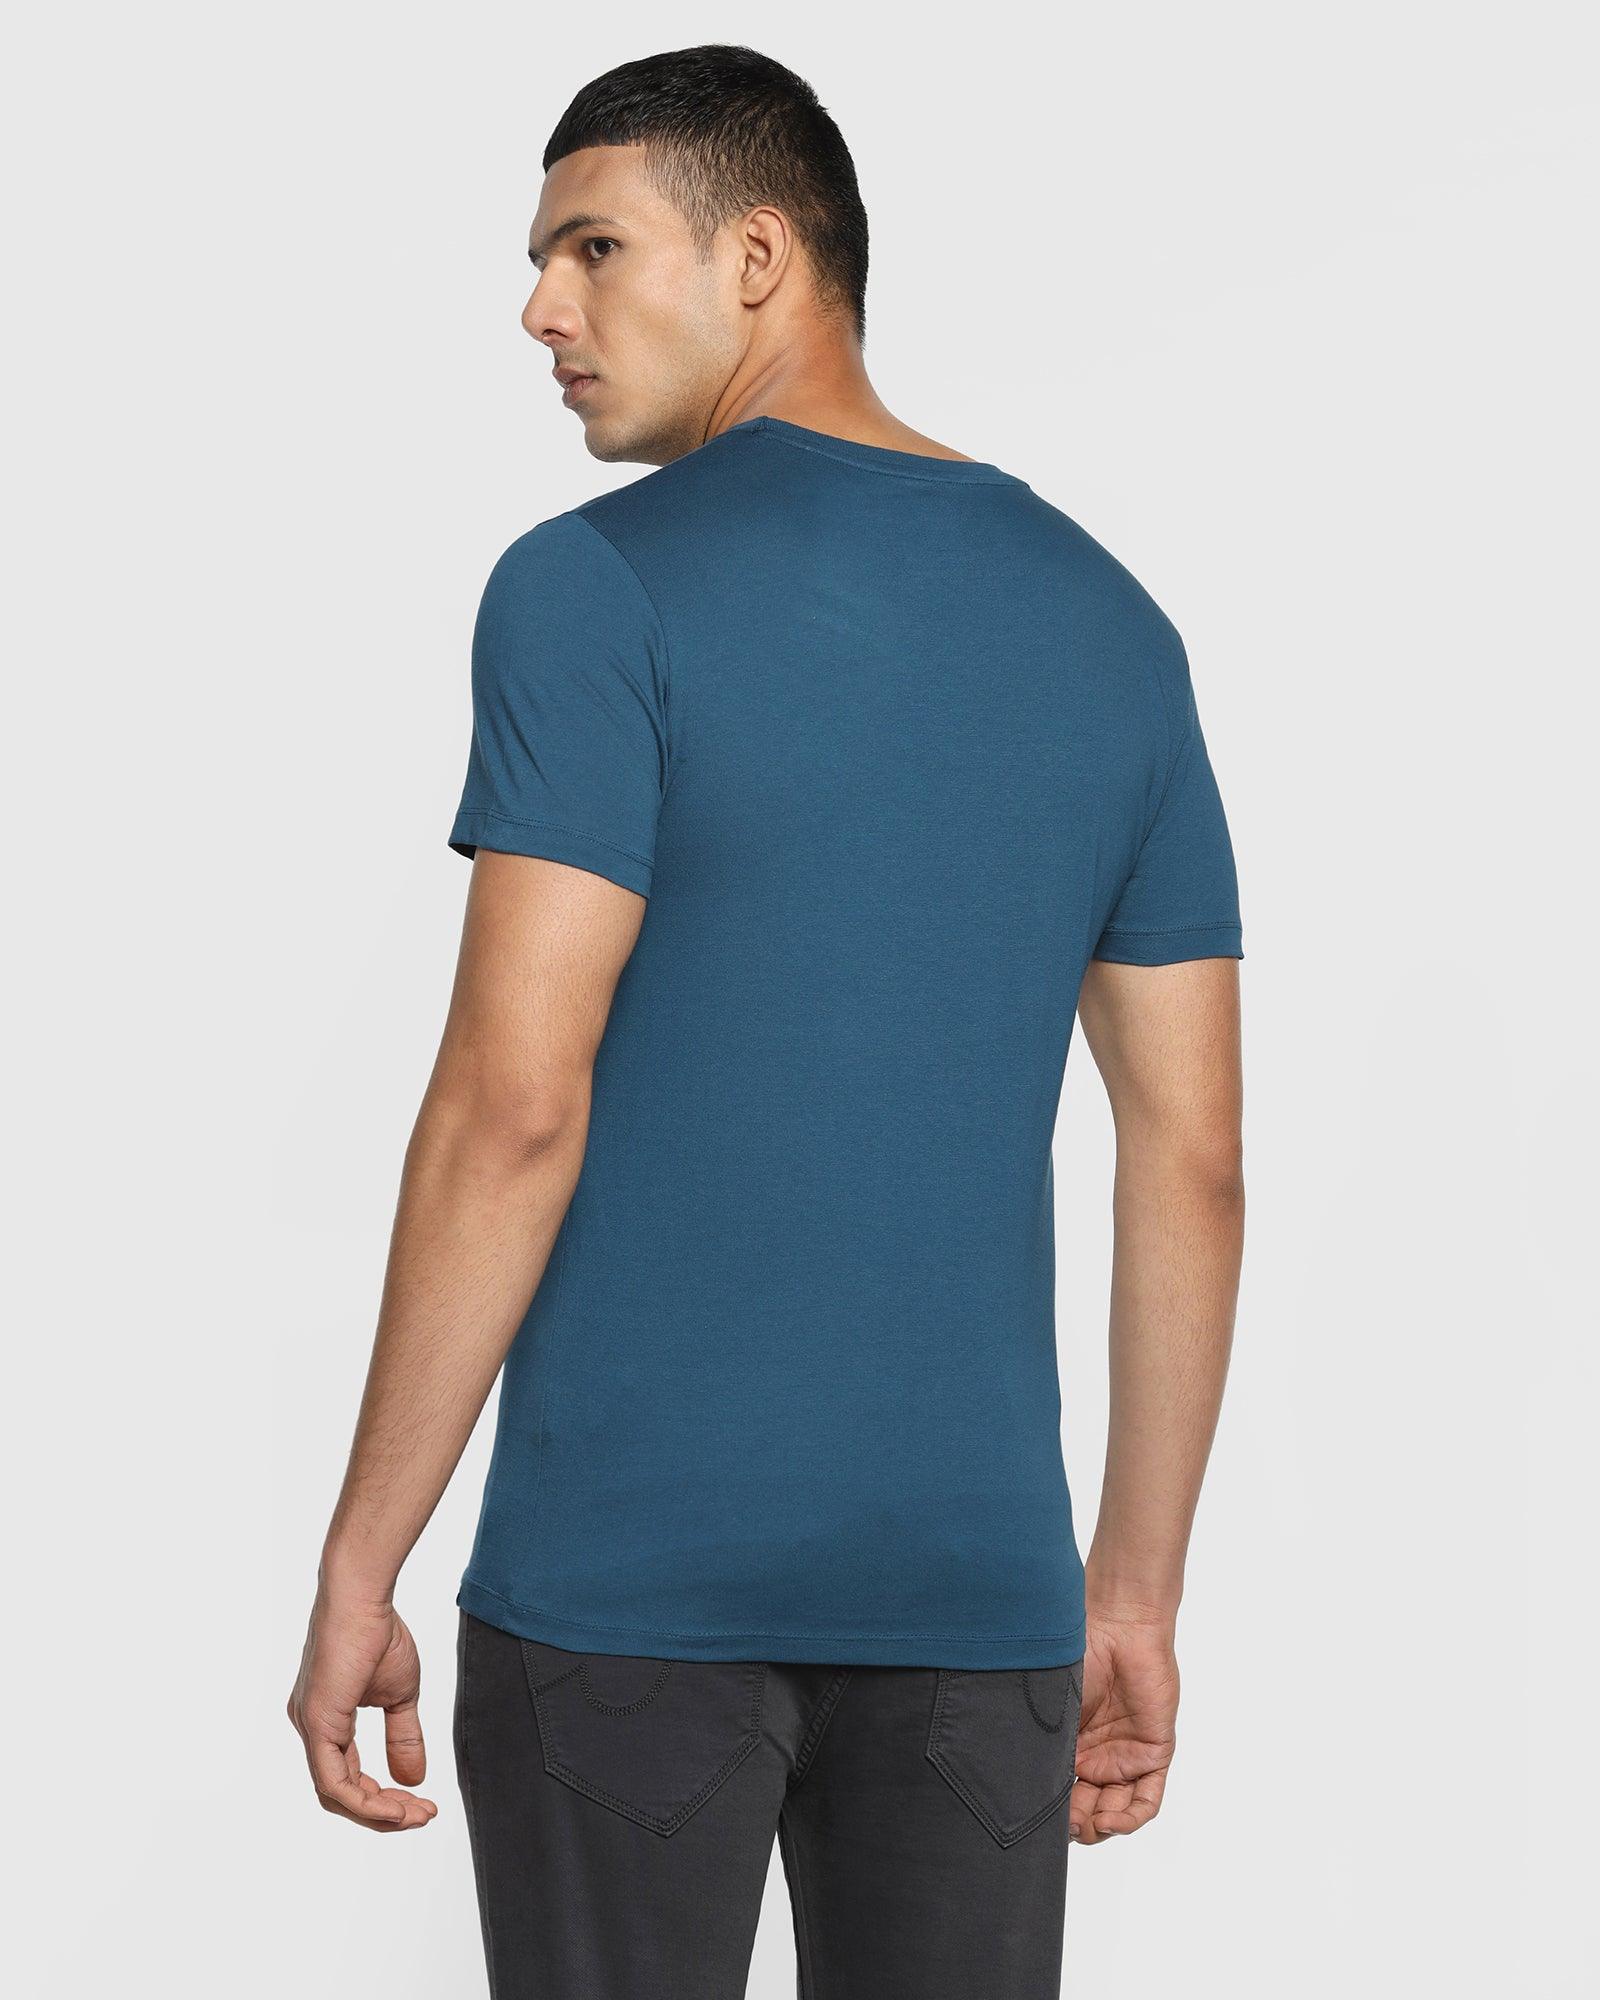 Crew Neck Teal Blue Printed T Shirt - Calvin